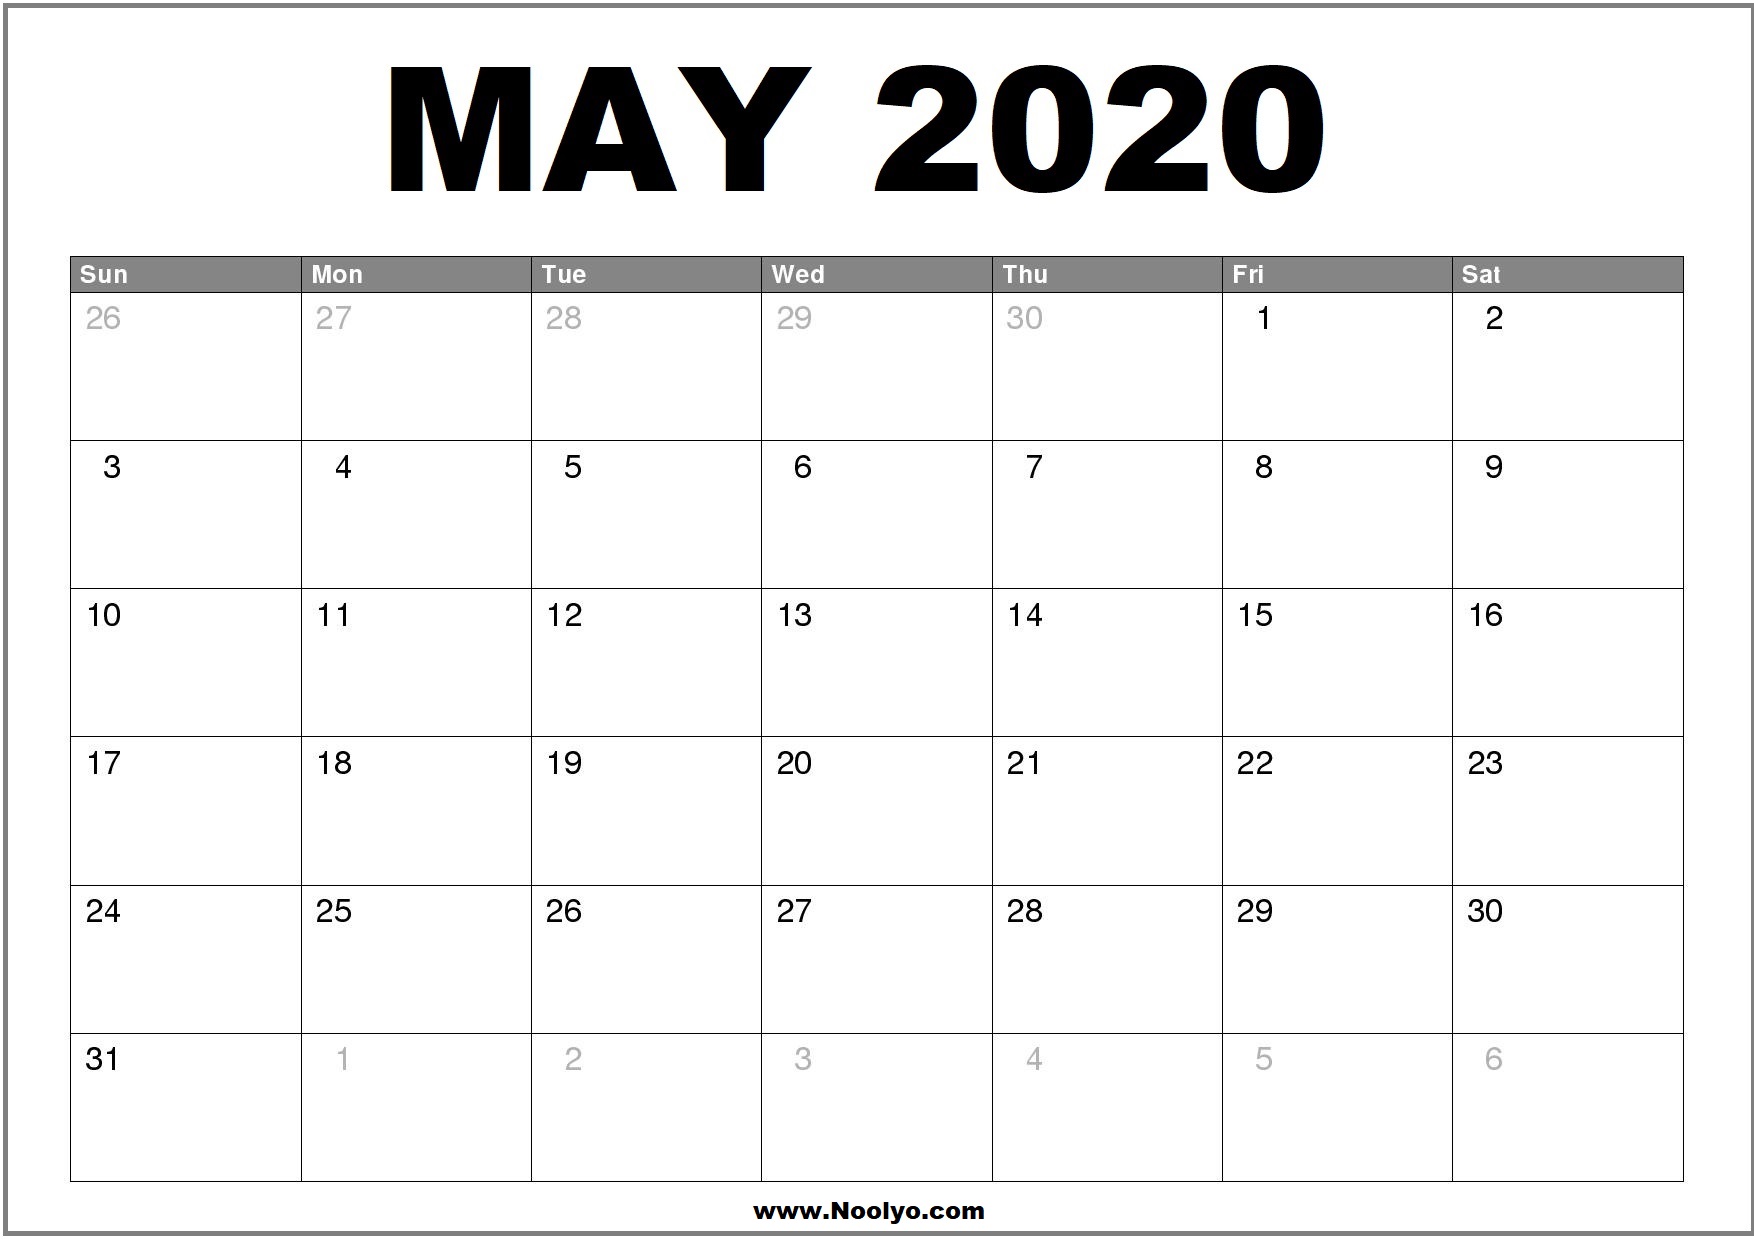 May 2020 Calendar Printable – Free Download